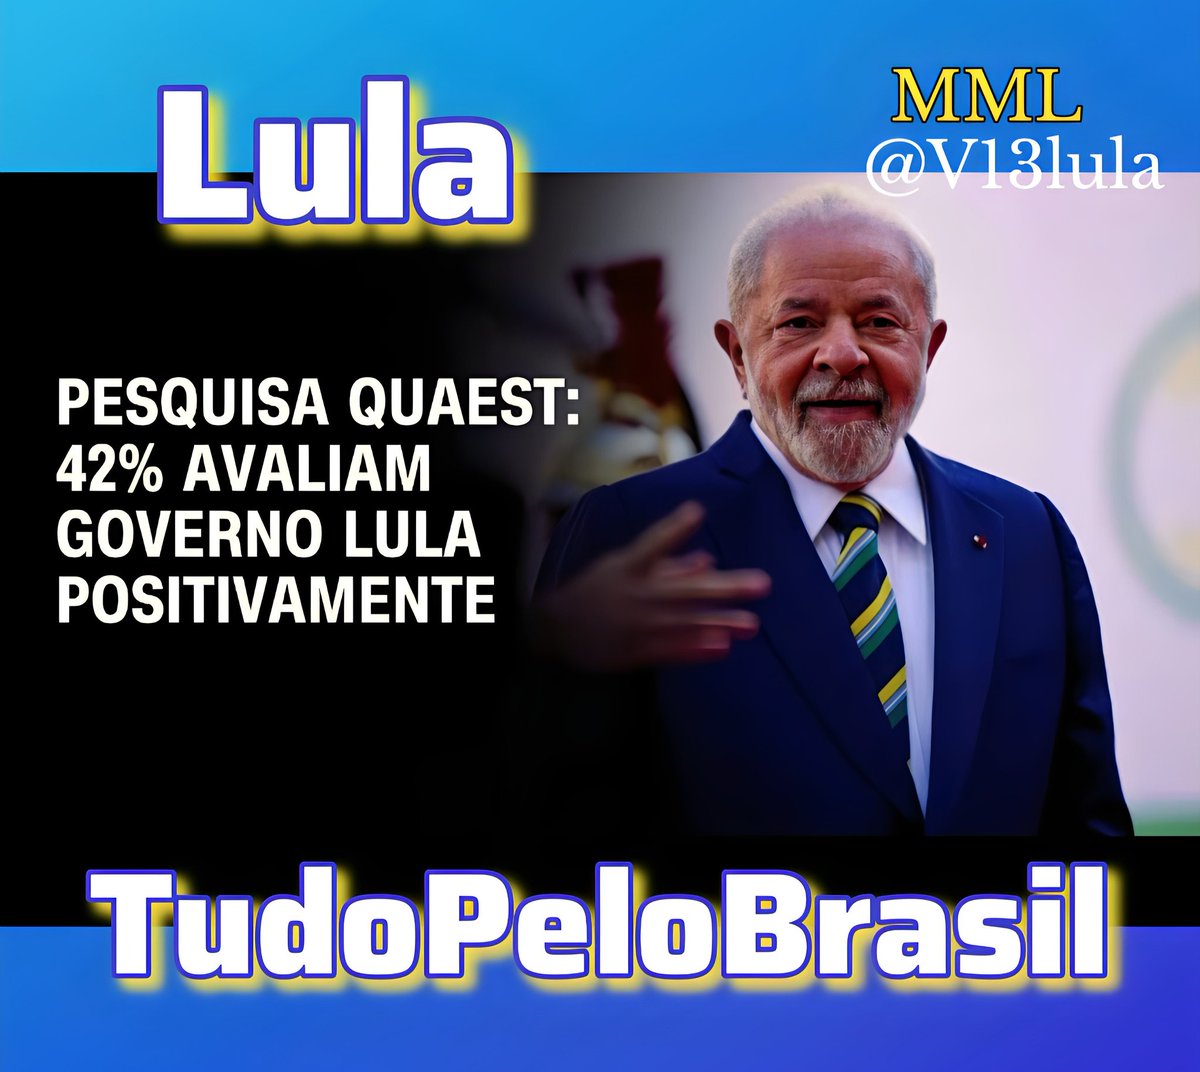 OBRIGADA LULA 

#LulaTudoPeloBrasil
#MML